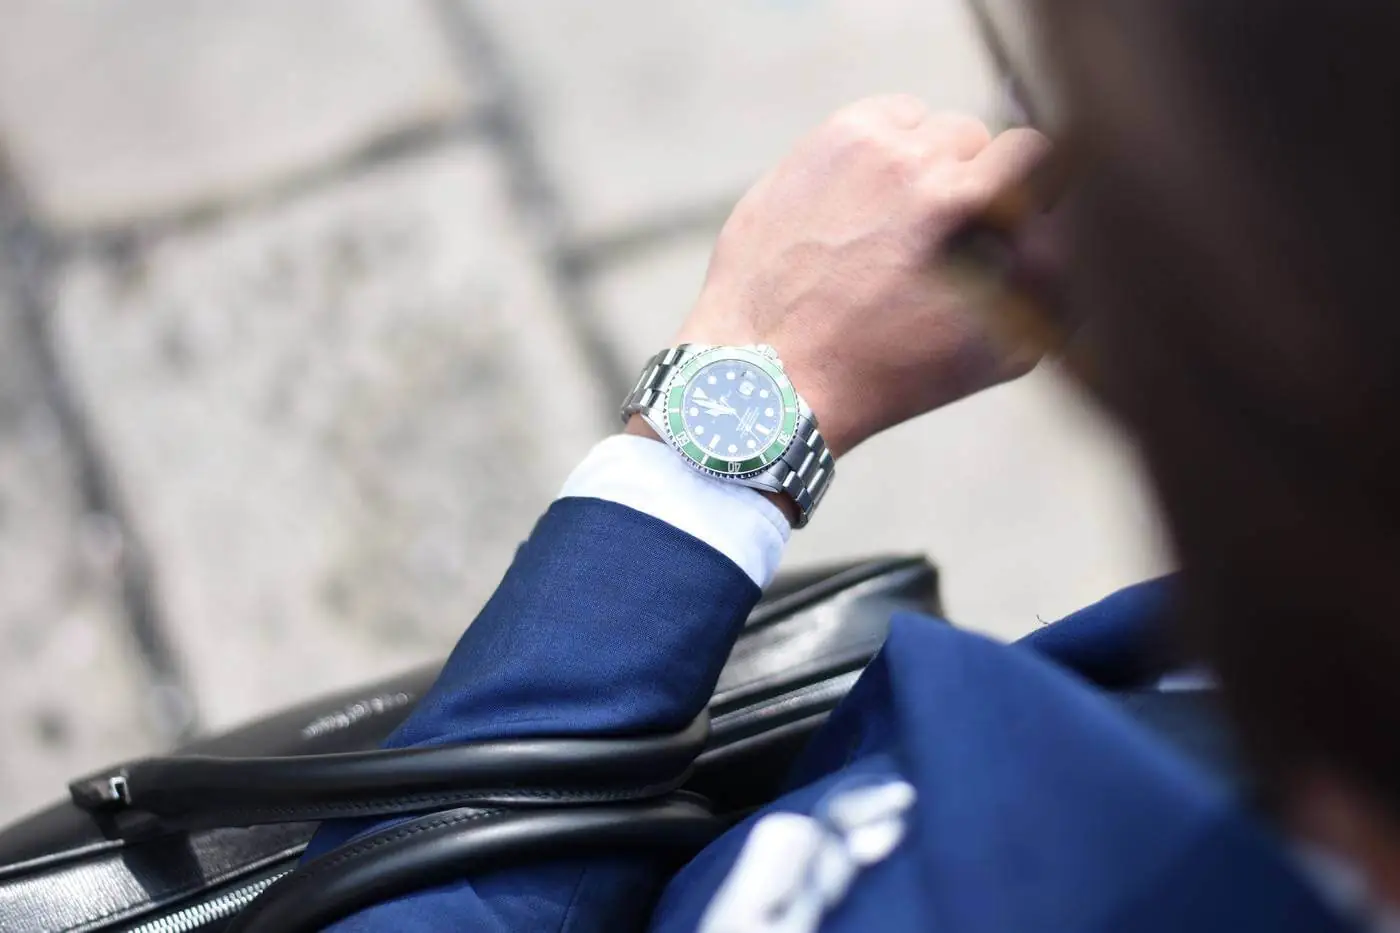 A man in a suit is wearing a watch.